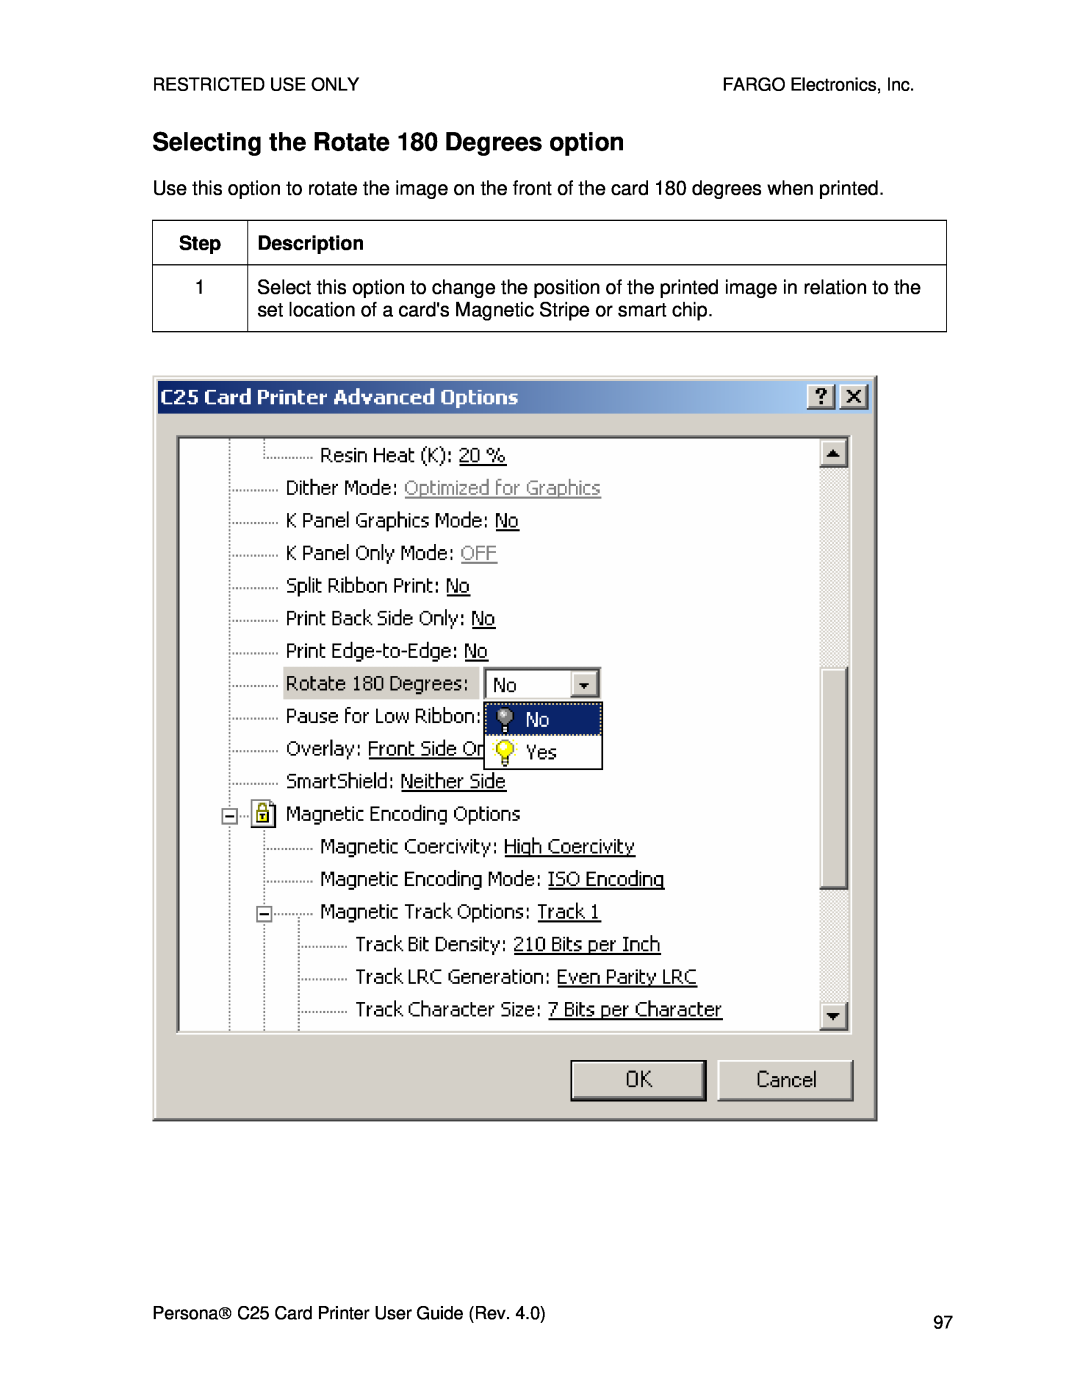 FARGO electronic S000256 manual Selecting the Rotate 180 Degrees option, Description 